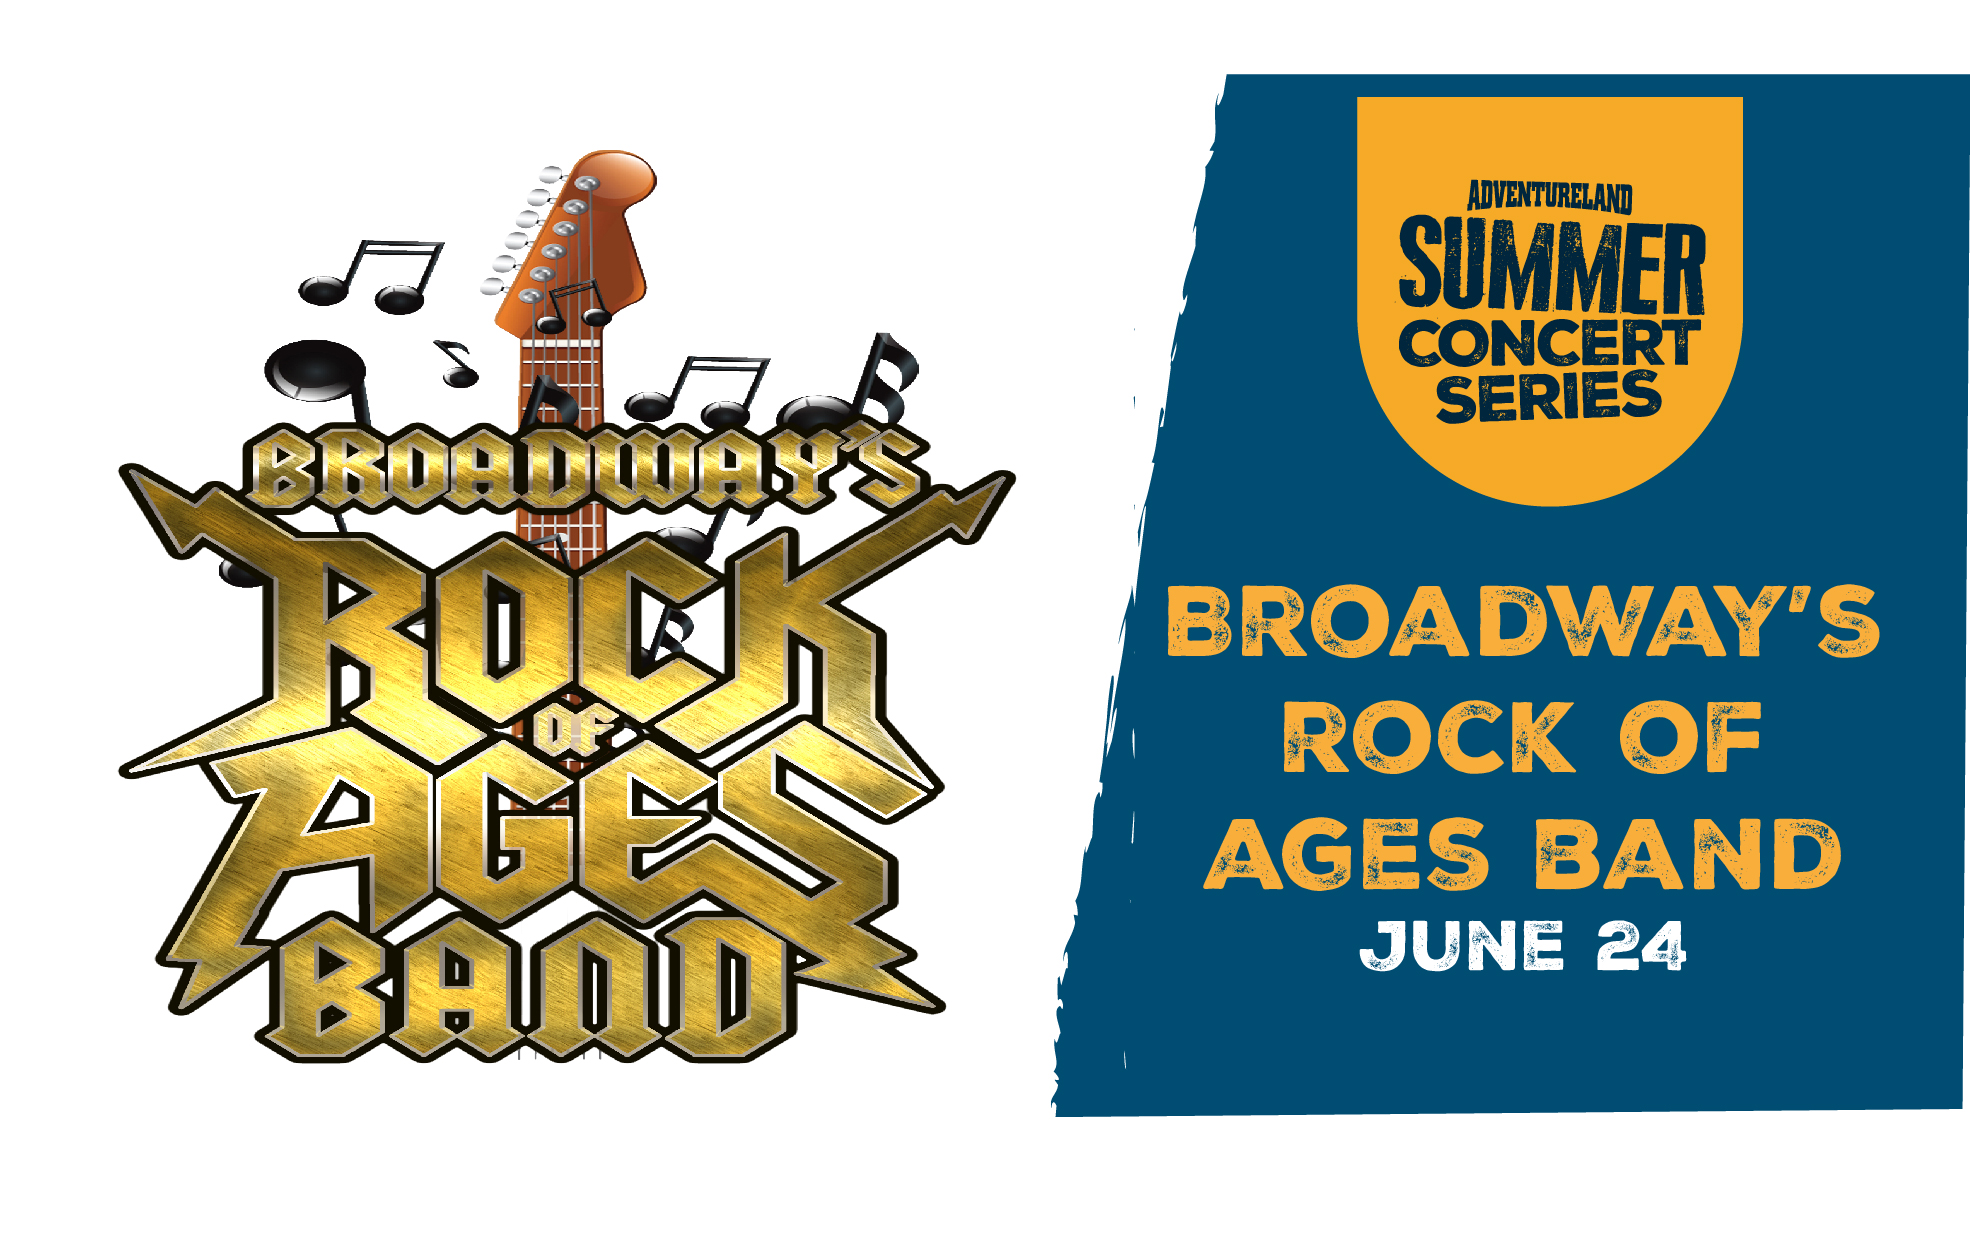 Adventureland Summer Concert Series Broadway’s Rock of Ages Band